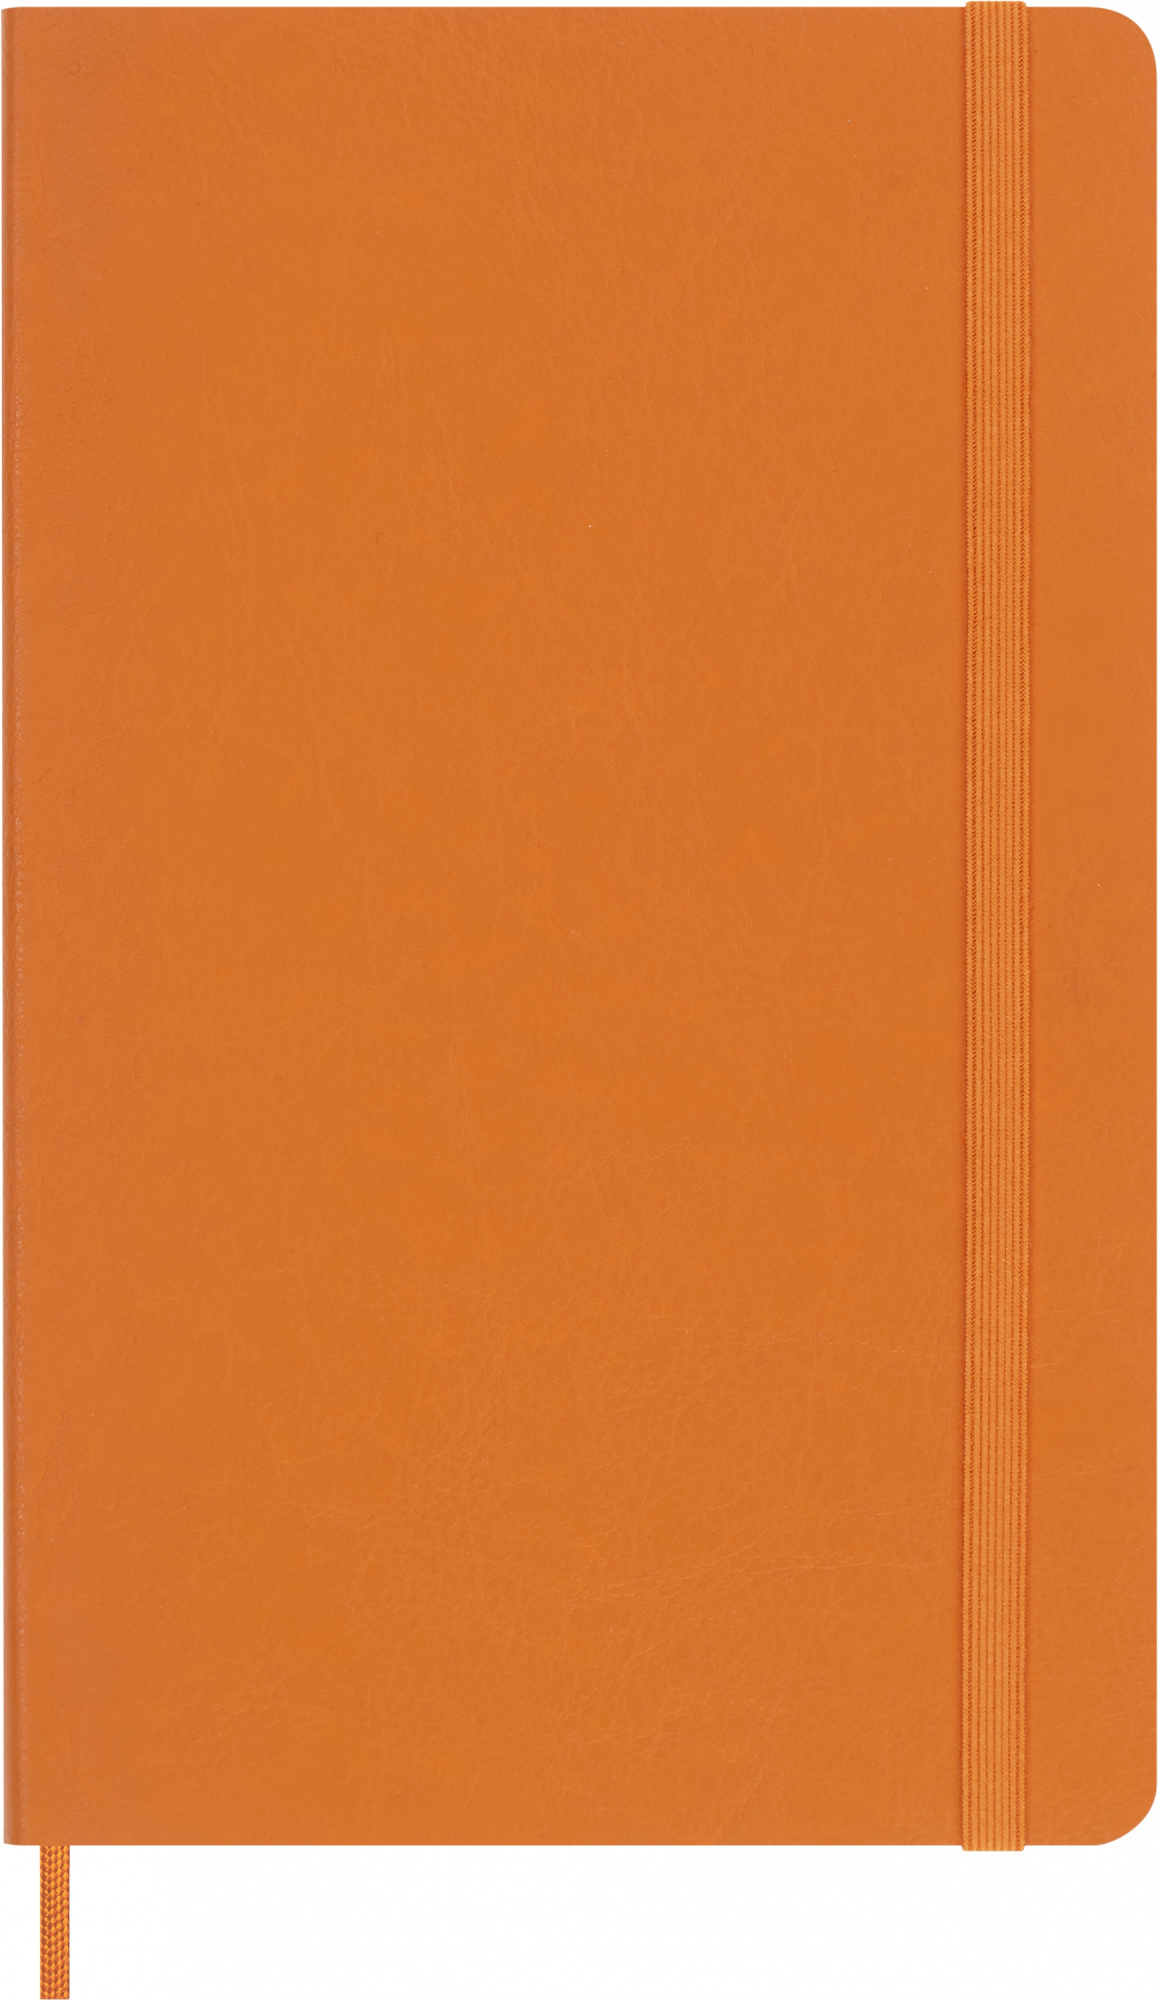 Блокнот Moleskine LIMITED EDITION PRECIOUS & ETHICAL BOA QP616N8VCAPRIBOX 130х210мм 240стр. линейка мягкая обложка подар.кор. оранжевый